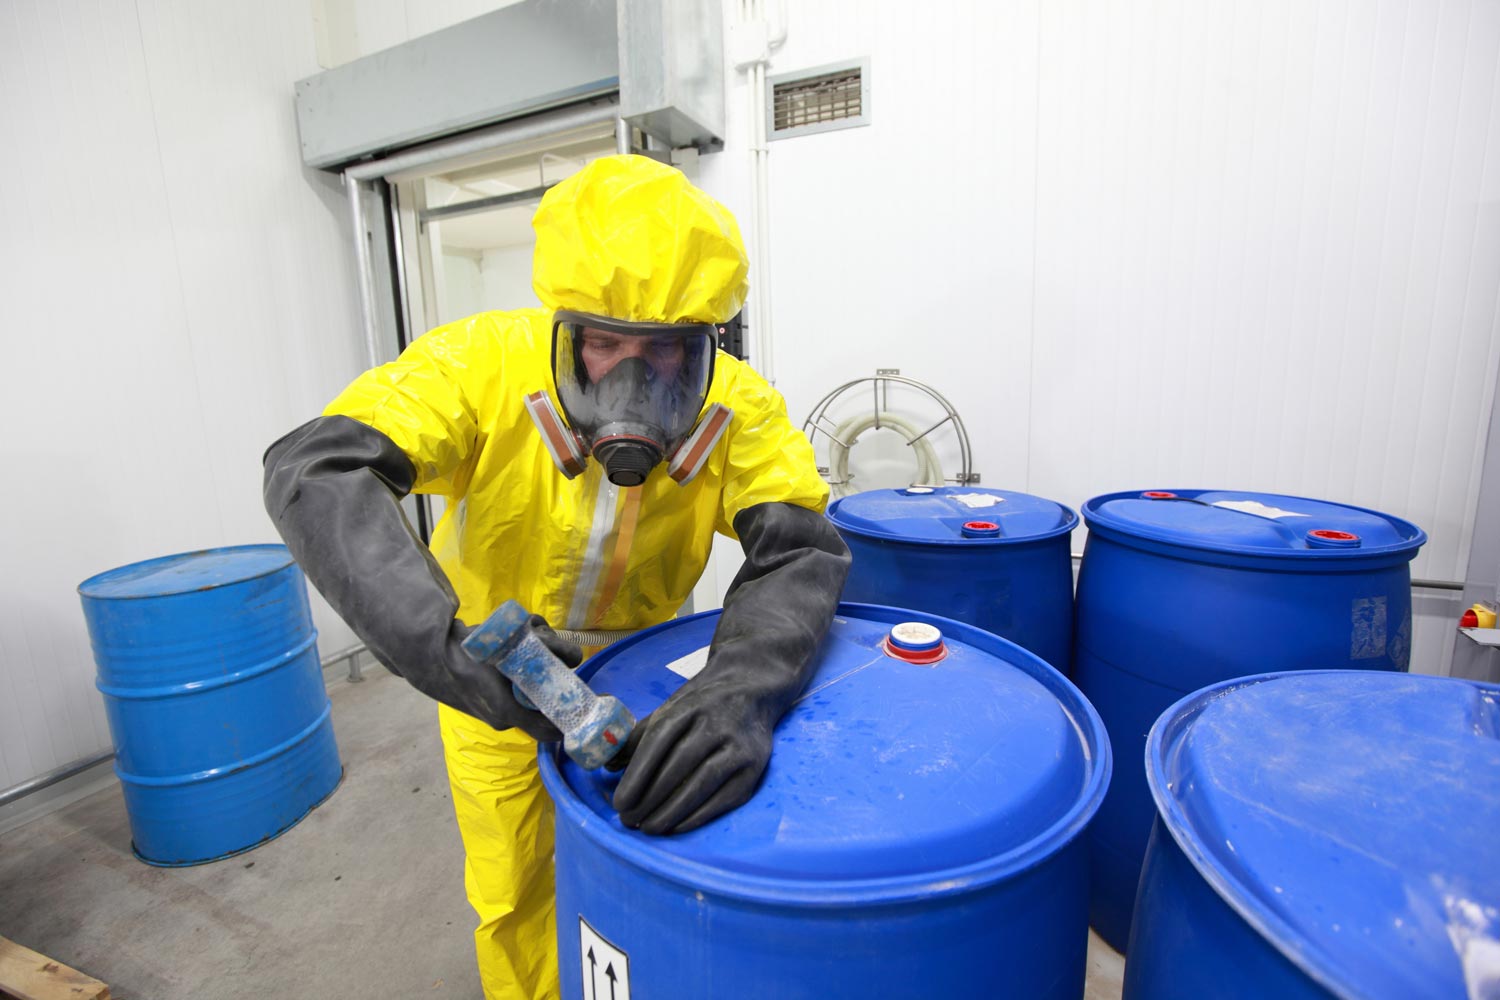 Hazardous Waste chemical Disposal in Atlanta Georgia